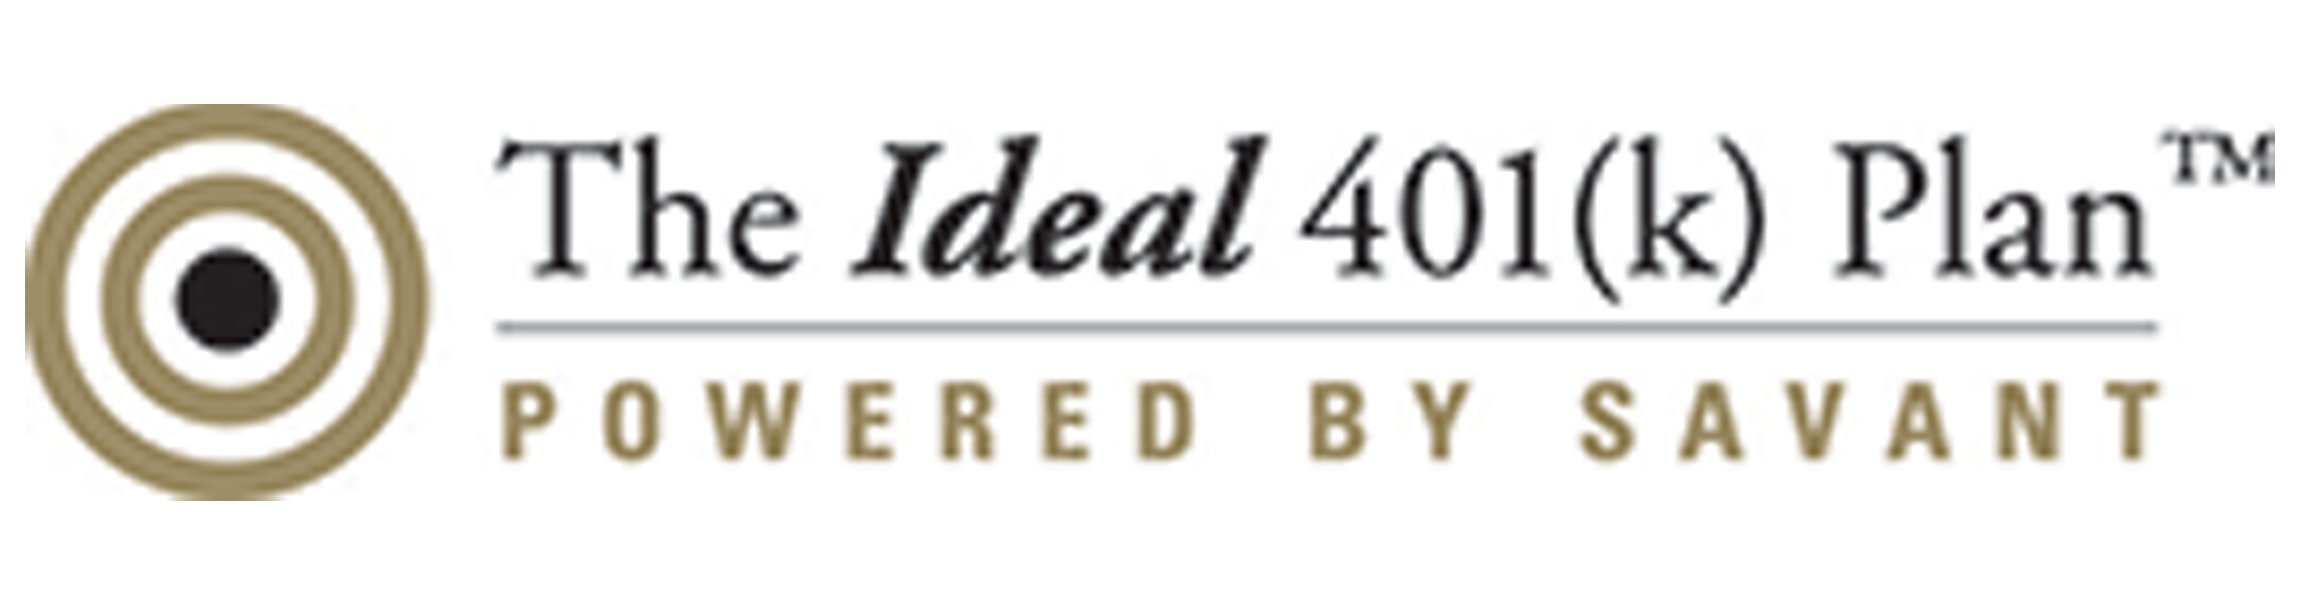 ideal-401k